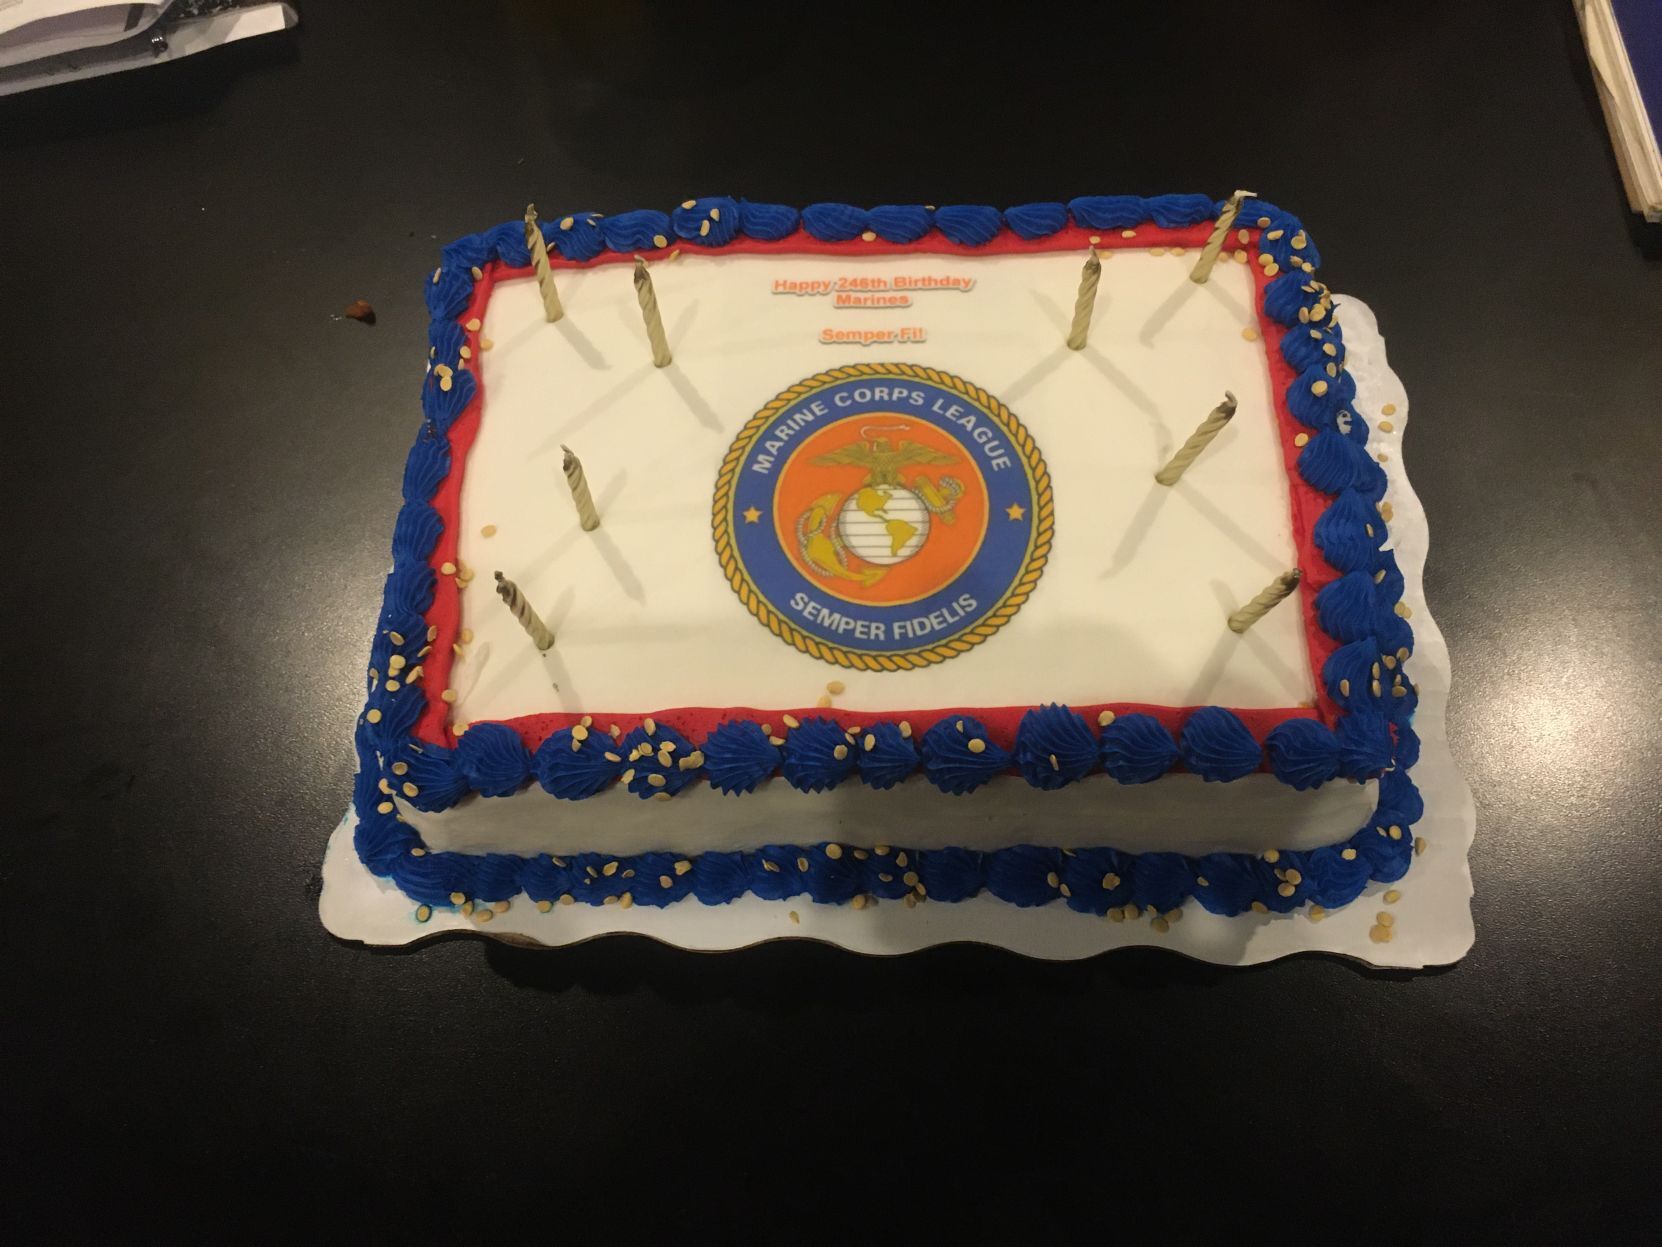 Happy Birthday Marine Corps